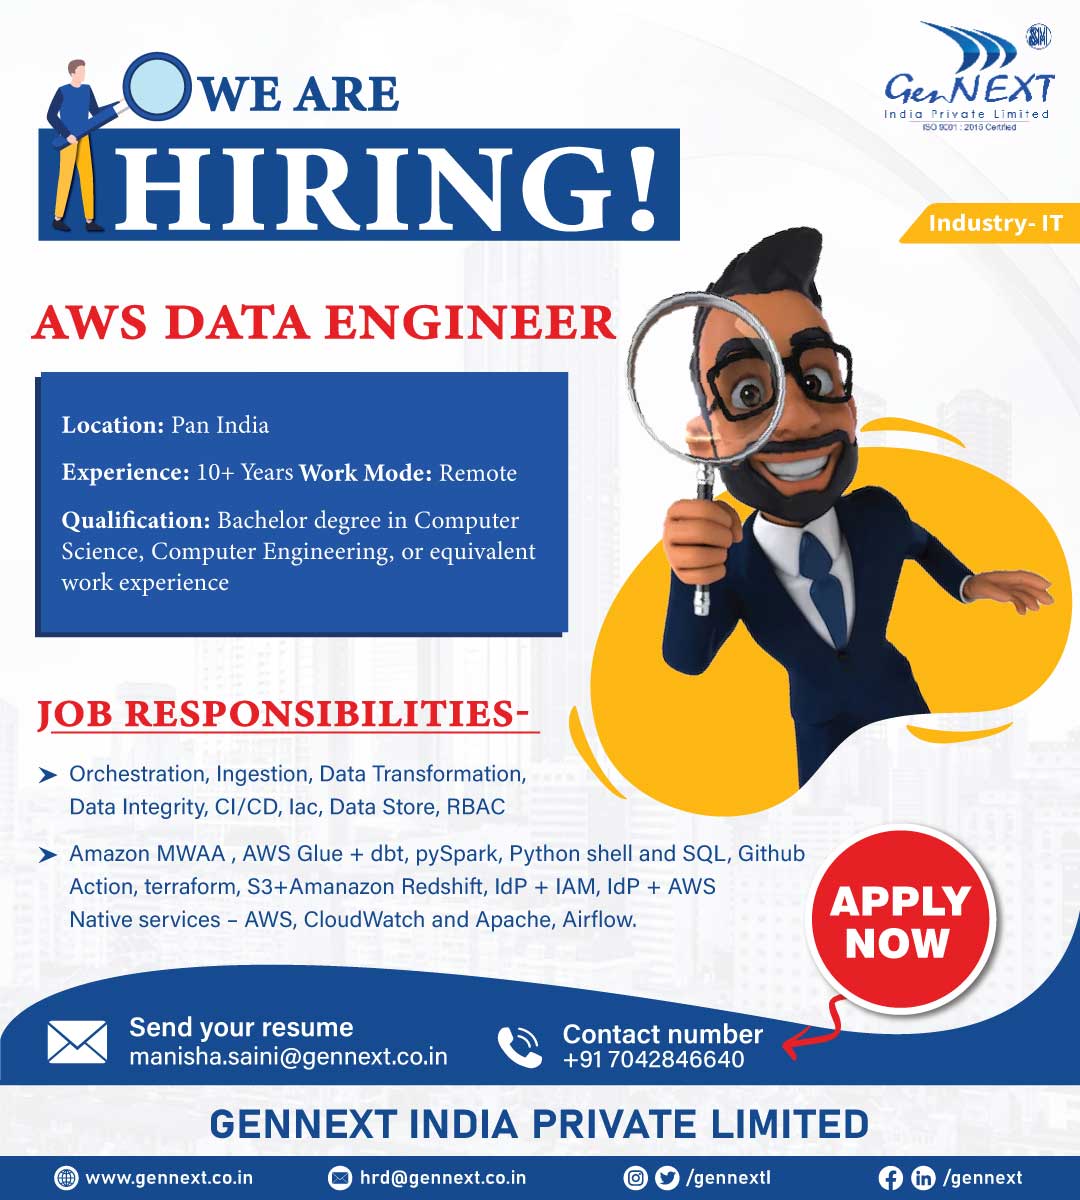 #UrgentHiring 💼📢🎯

Position: AWS Data Engineer
Location: Pan India
Work Mode: Remote

#AWS #AWSDataEngineer #Engineer #PanIndia #Remote #WorkfromHome #Engineering #hiringnow #jobsearching #jobsearch #jobseekers #hr #jobopenings2024 #gennextjob #gennexthiring #GenNext #hiring